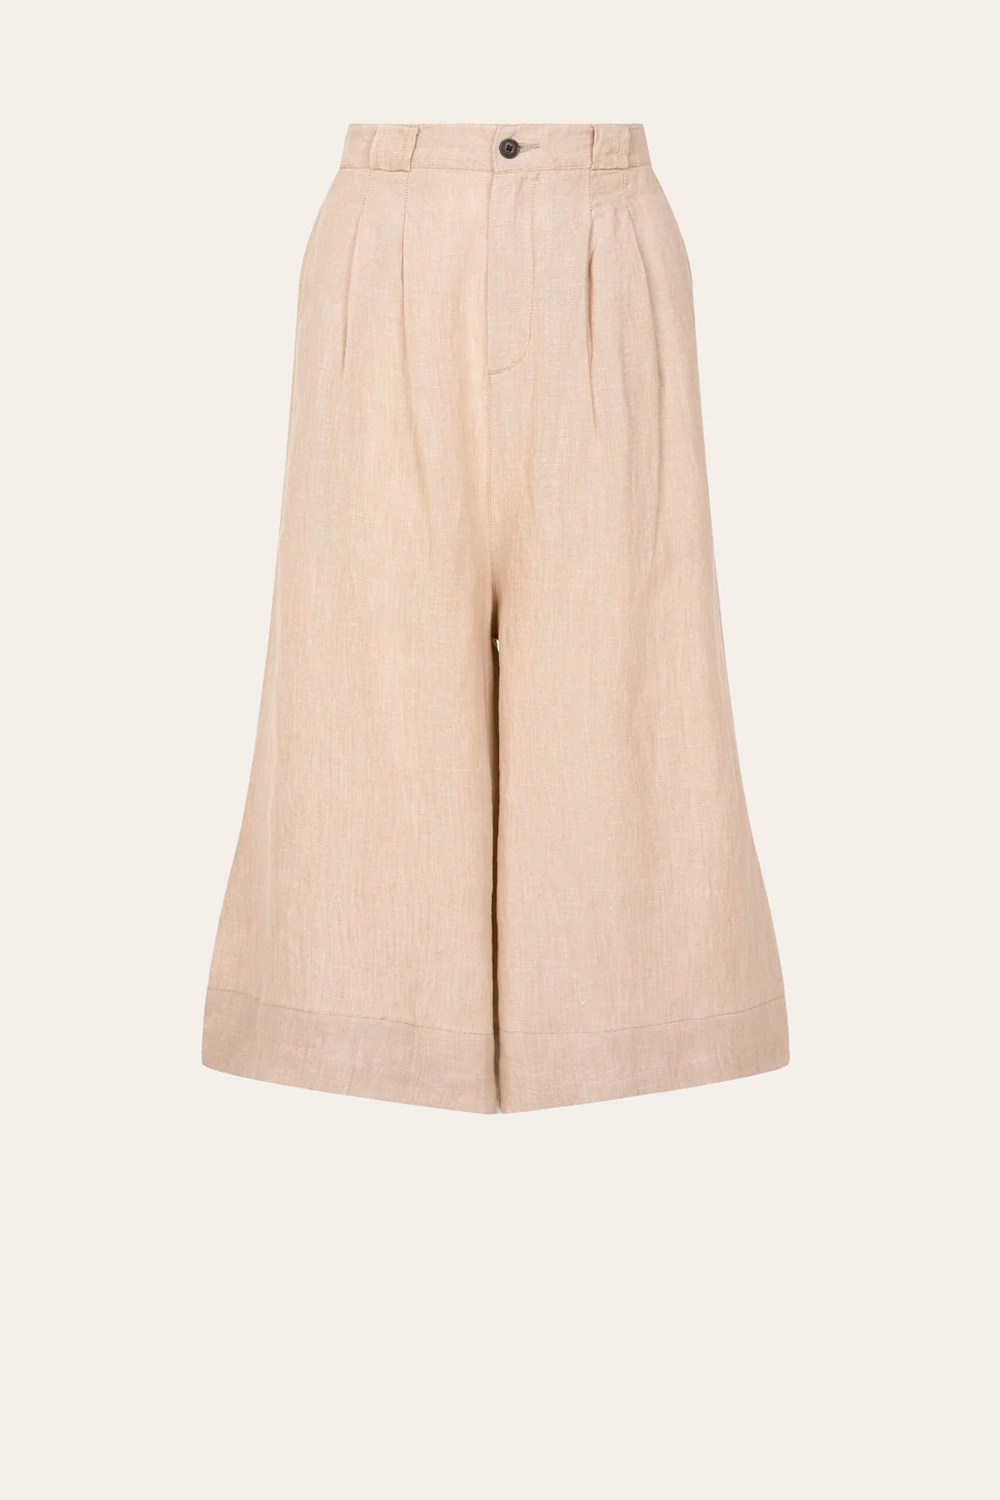 Natural linen baggy shorts, Light feather gray